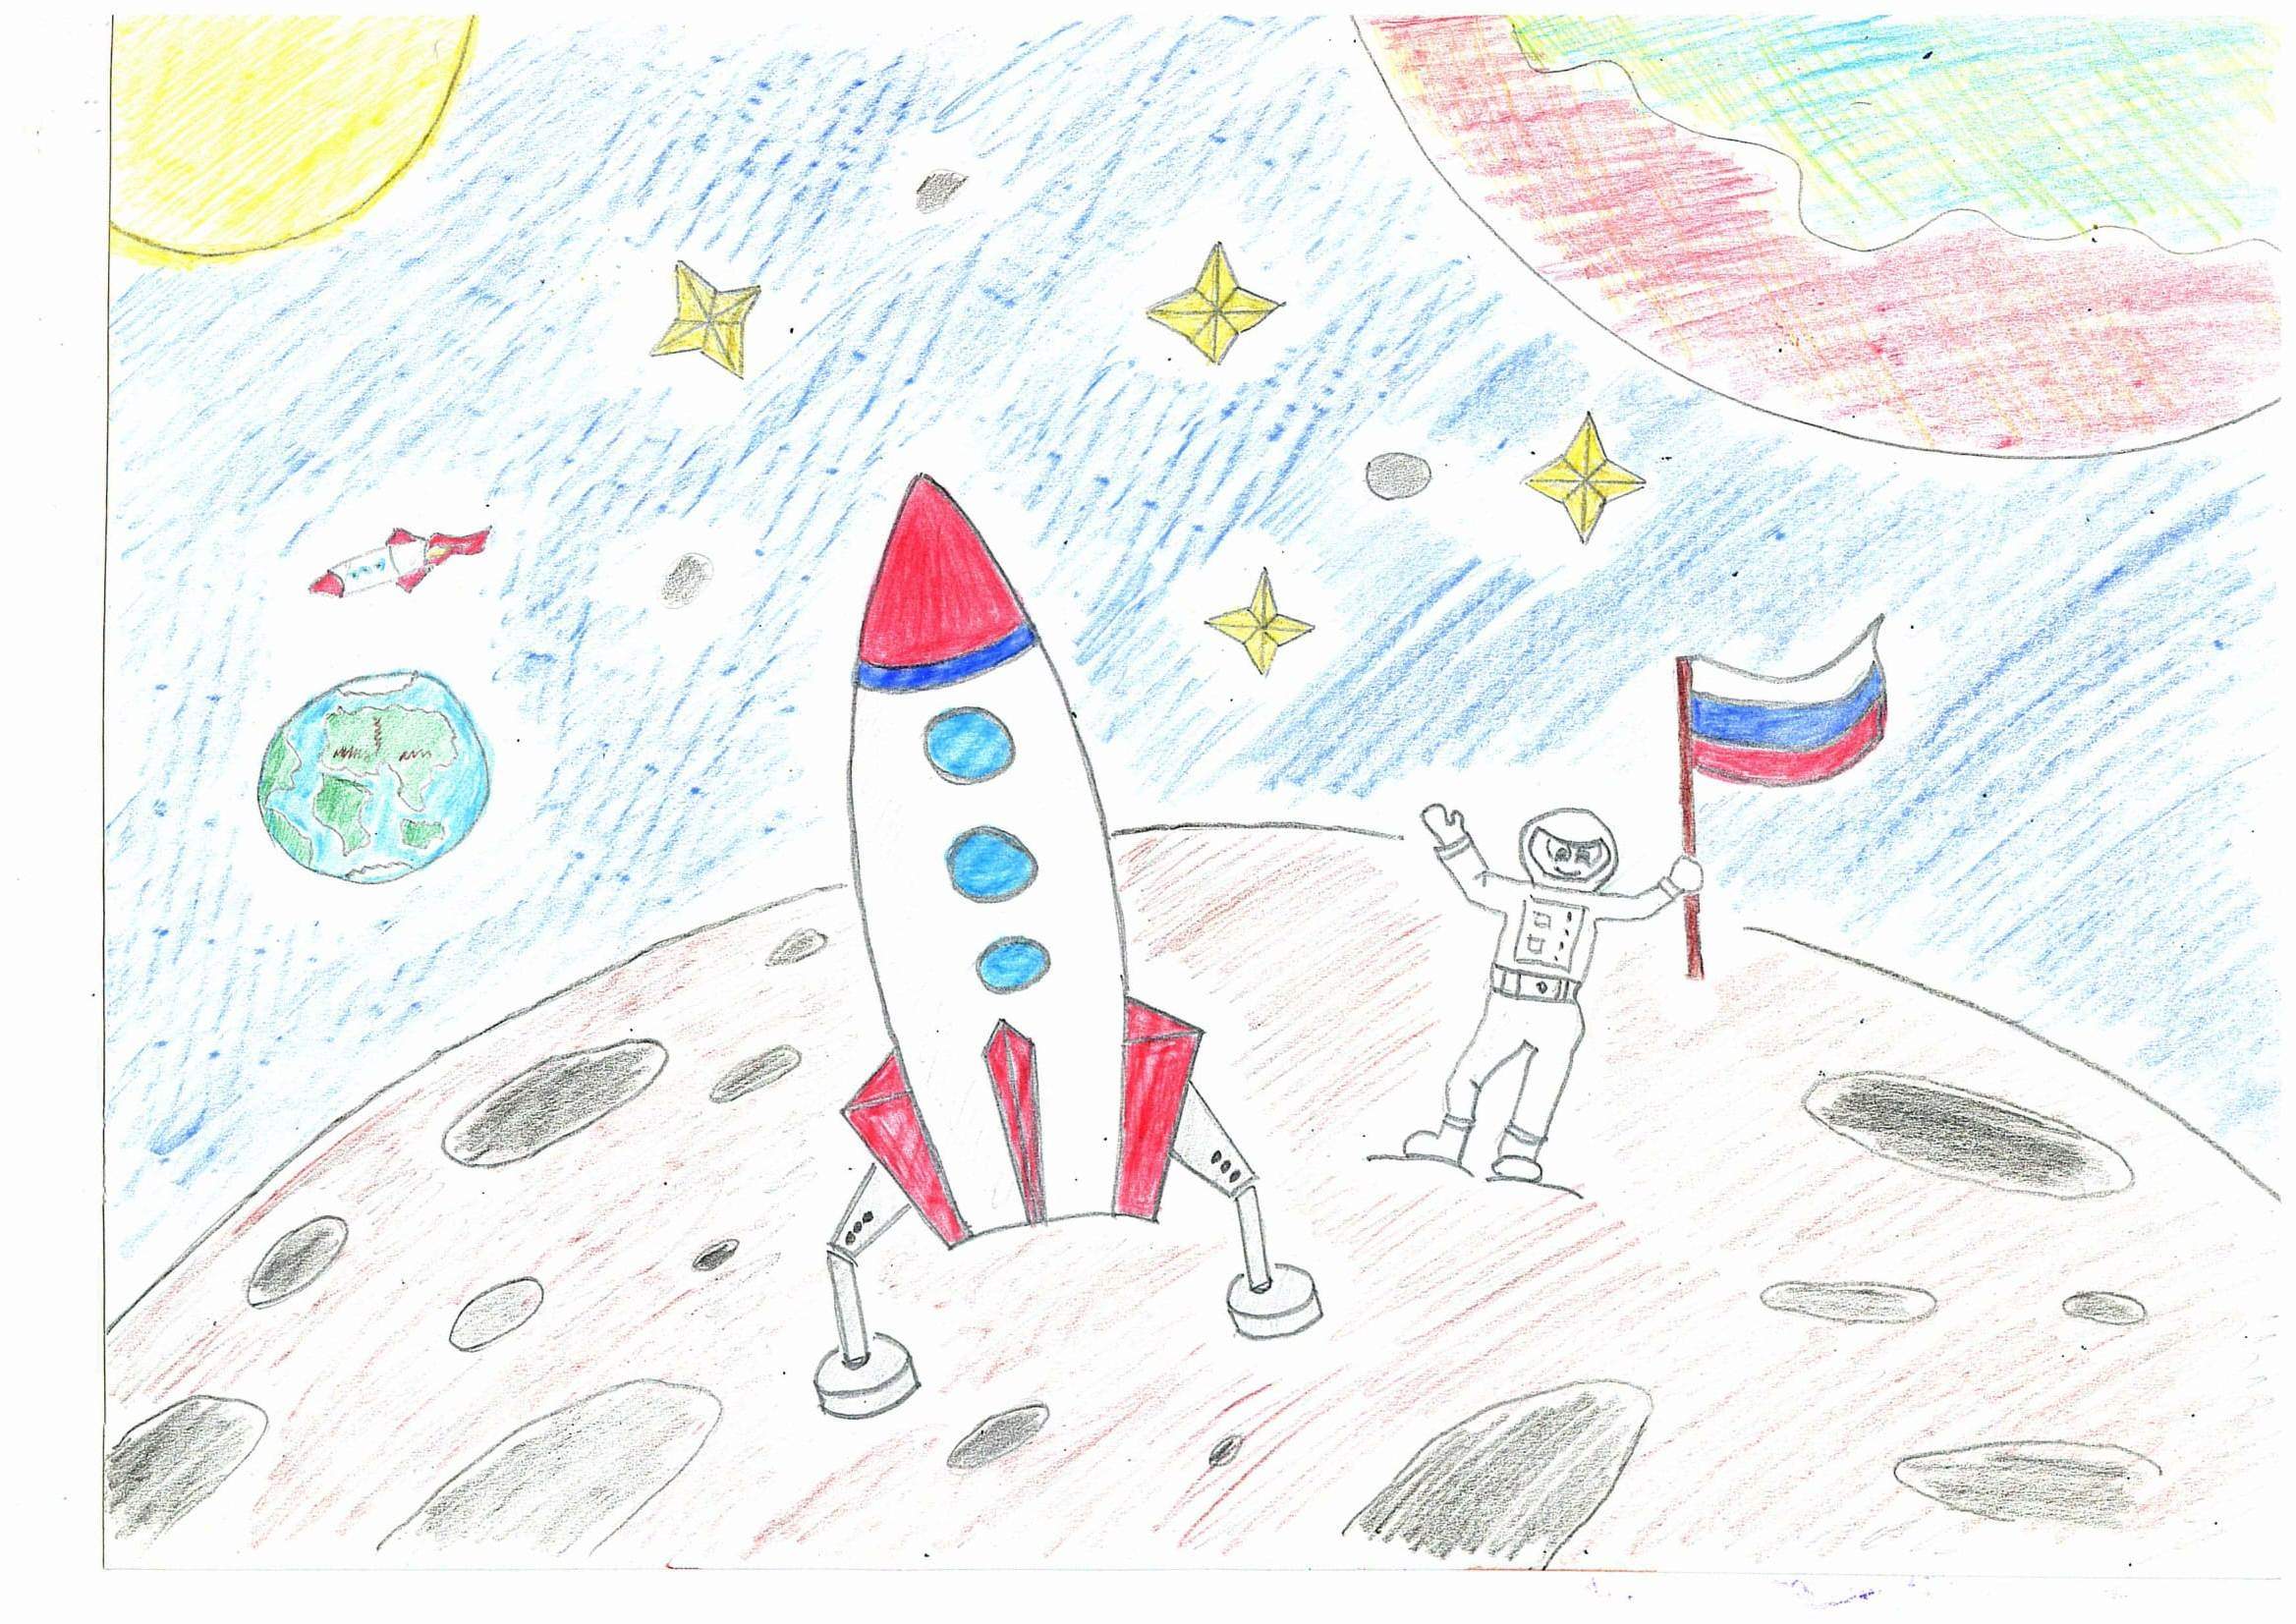 Рисунок на тему космонавтики 5 класс. Рисунок на тему космос. Рисунок на космическую тему. Рисование ко Дню космонавтики. Рисунок ко Дню космонавтики.